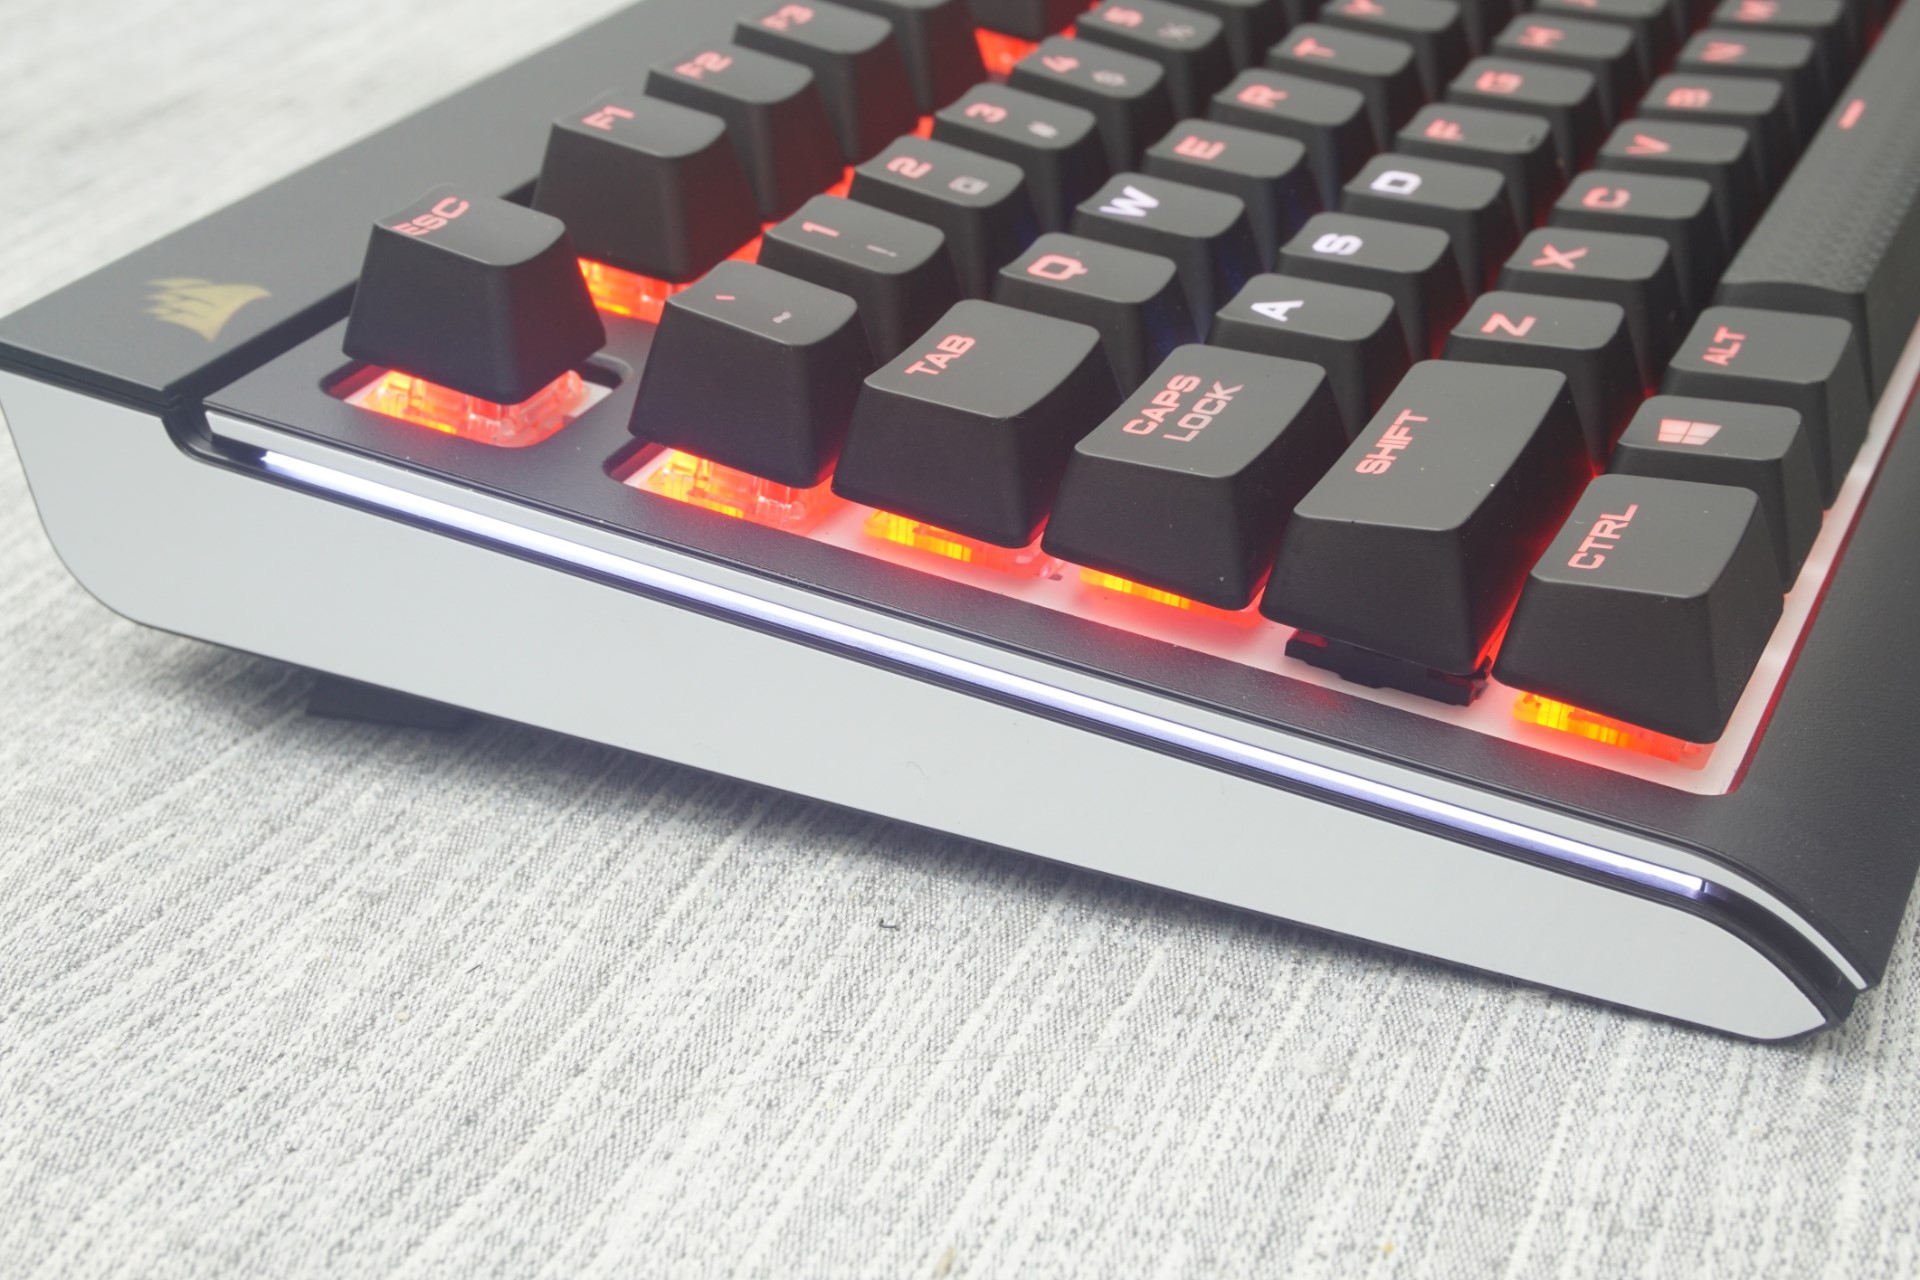 rulle I virkeligheden Taknemmelig The Corsair Strafe RGB Mechanical Keyboard - The Corsair Strafe RGB  Mechanical Keyboard Review with MX Silent (Red) Switches